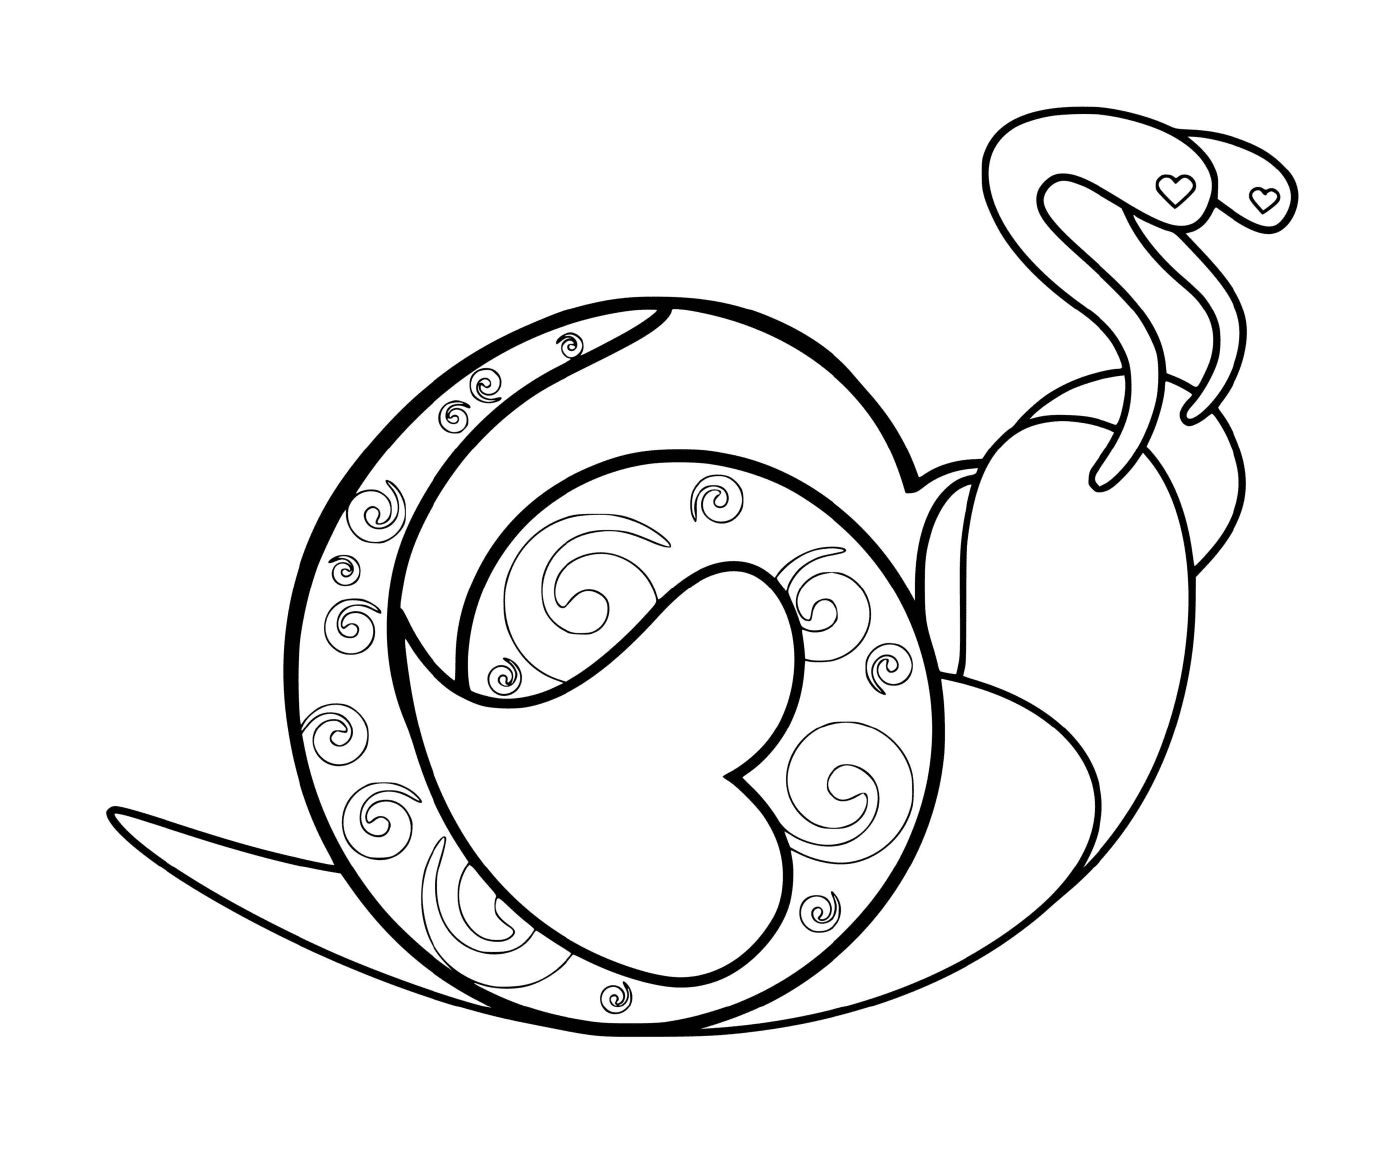   Un escargot avec des motifs tourbillonnants 